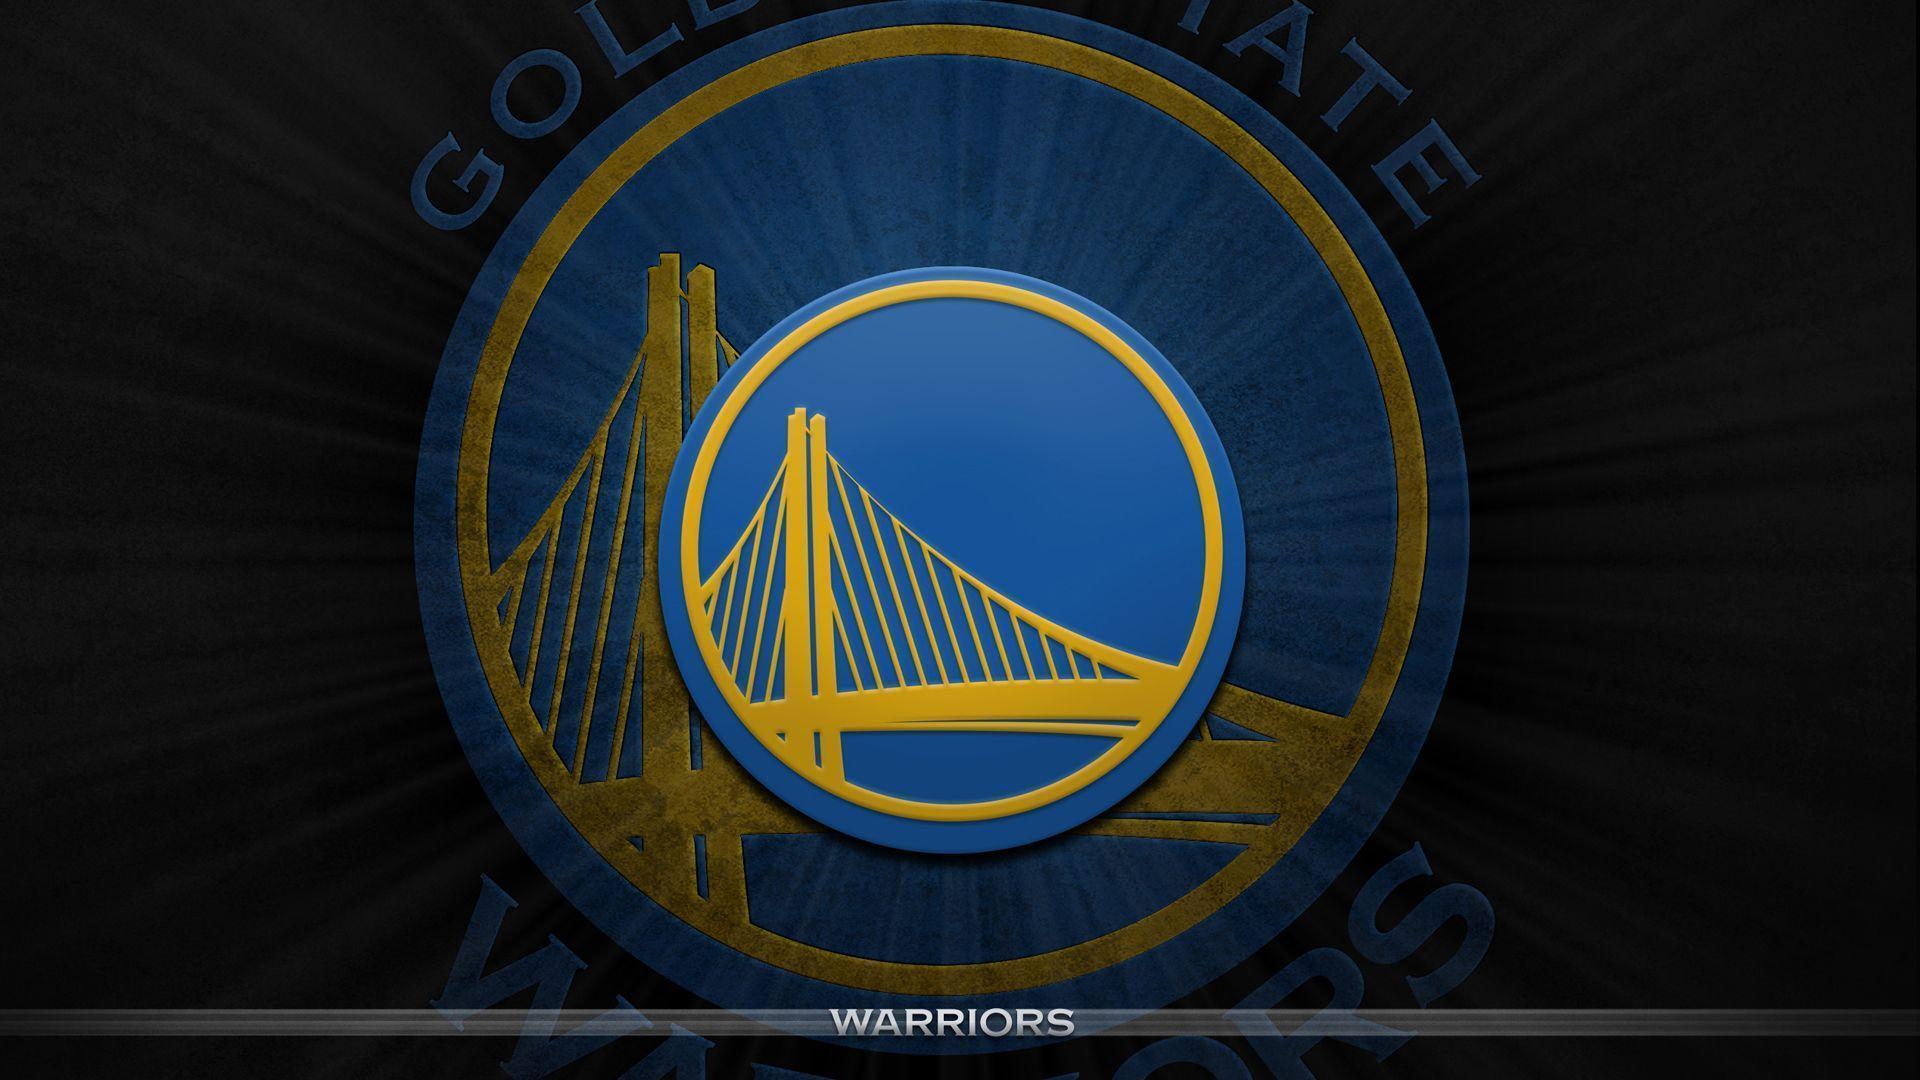 Golden State Warriors Screensaver Wallpapers